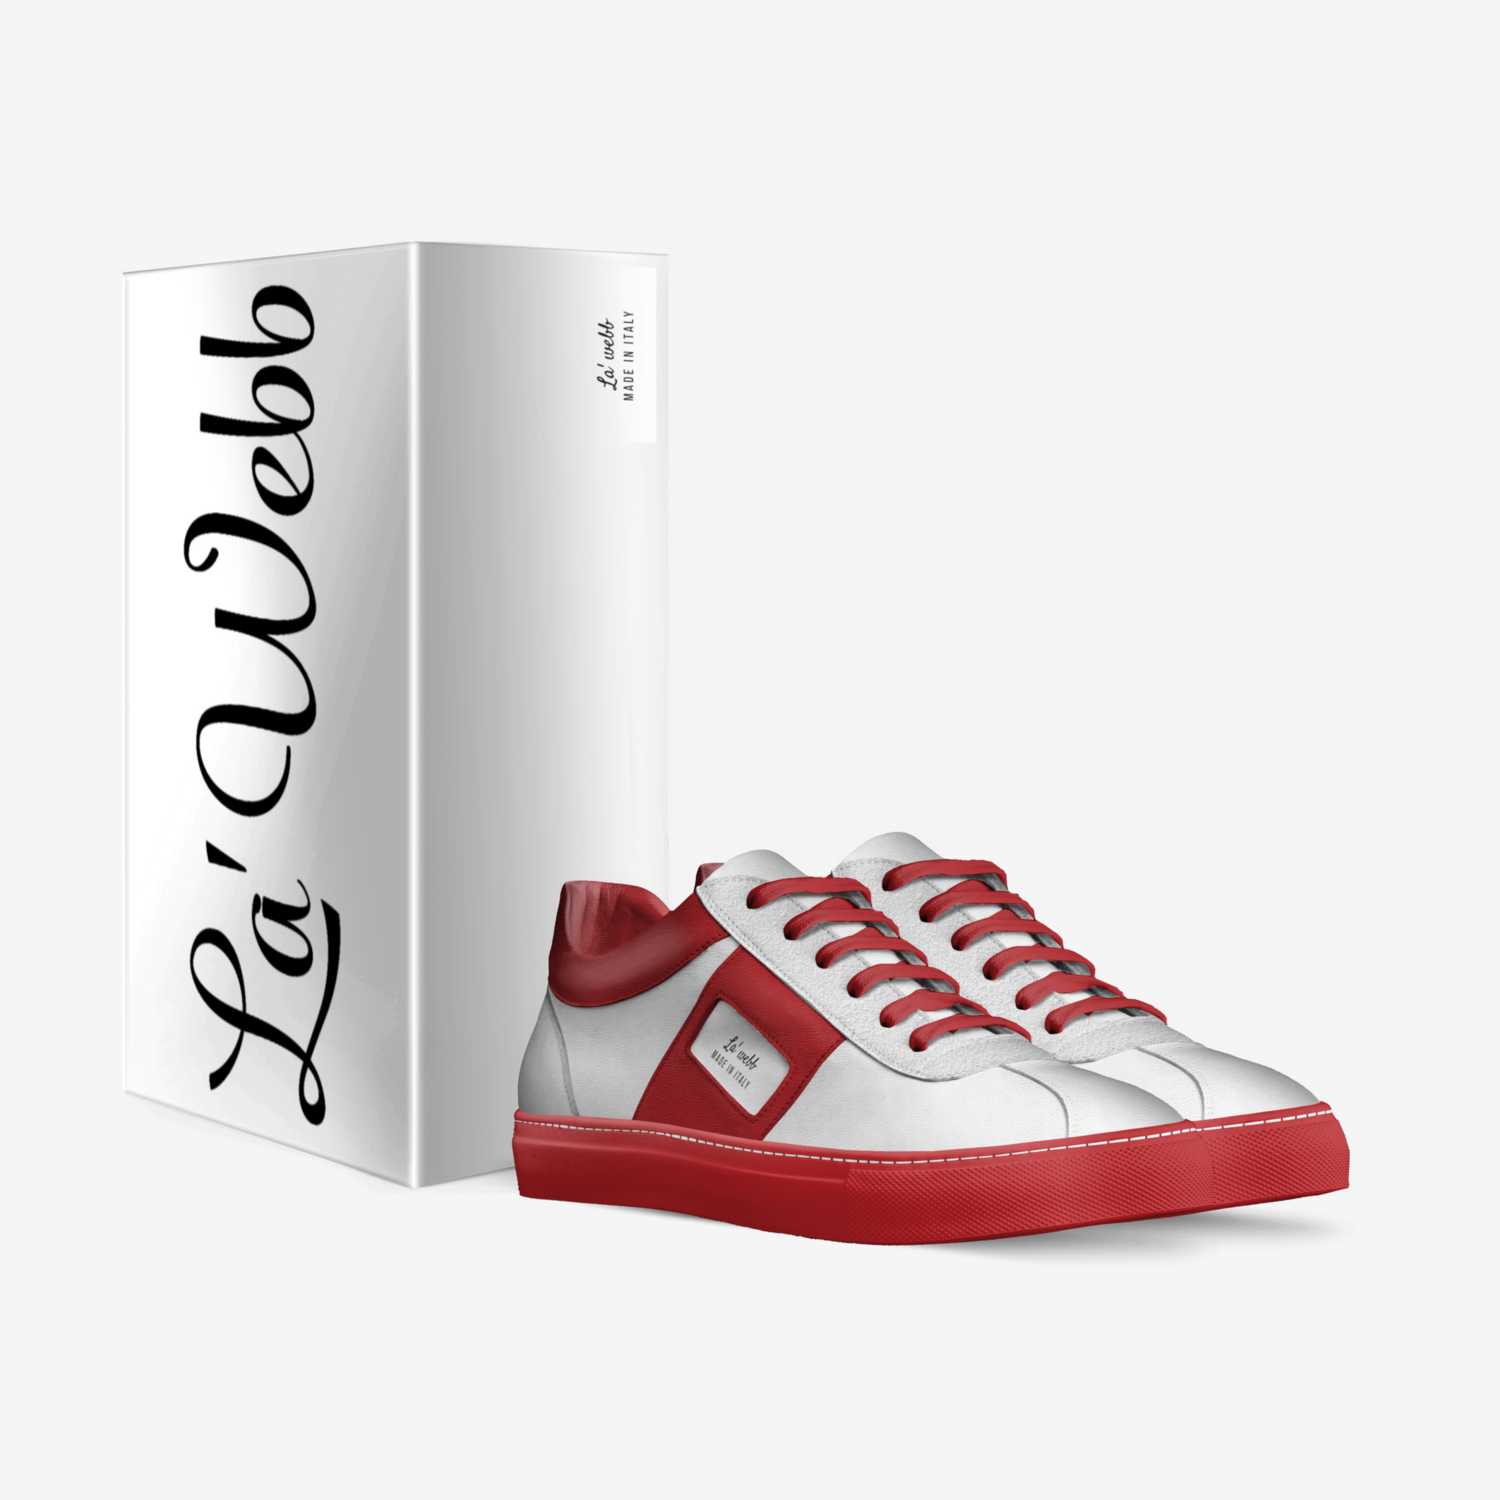 La' webb custom made in Italy shoes by Wilbert Webb | Box view